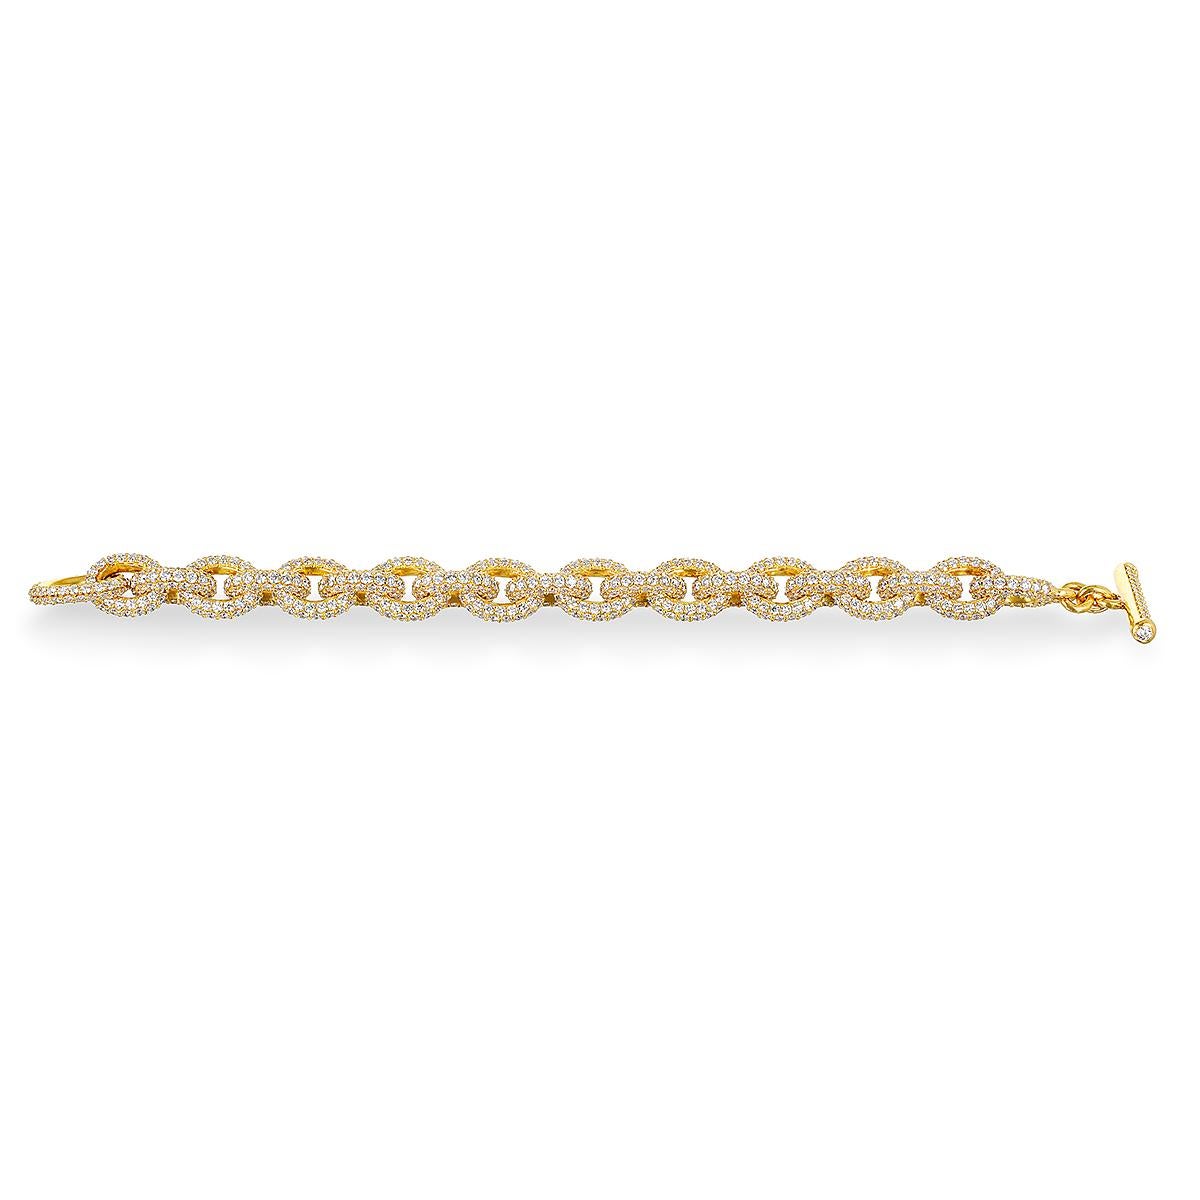 Contemporary Faye Kim 18 Karat Gold Diamond Link Bracelet with Toggle Closure For Sale